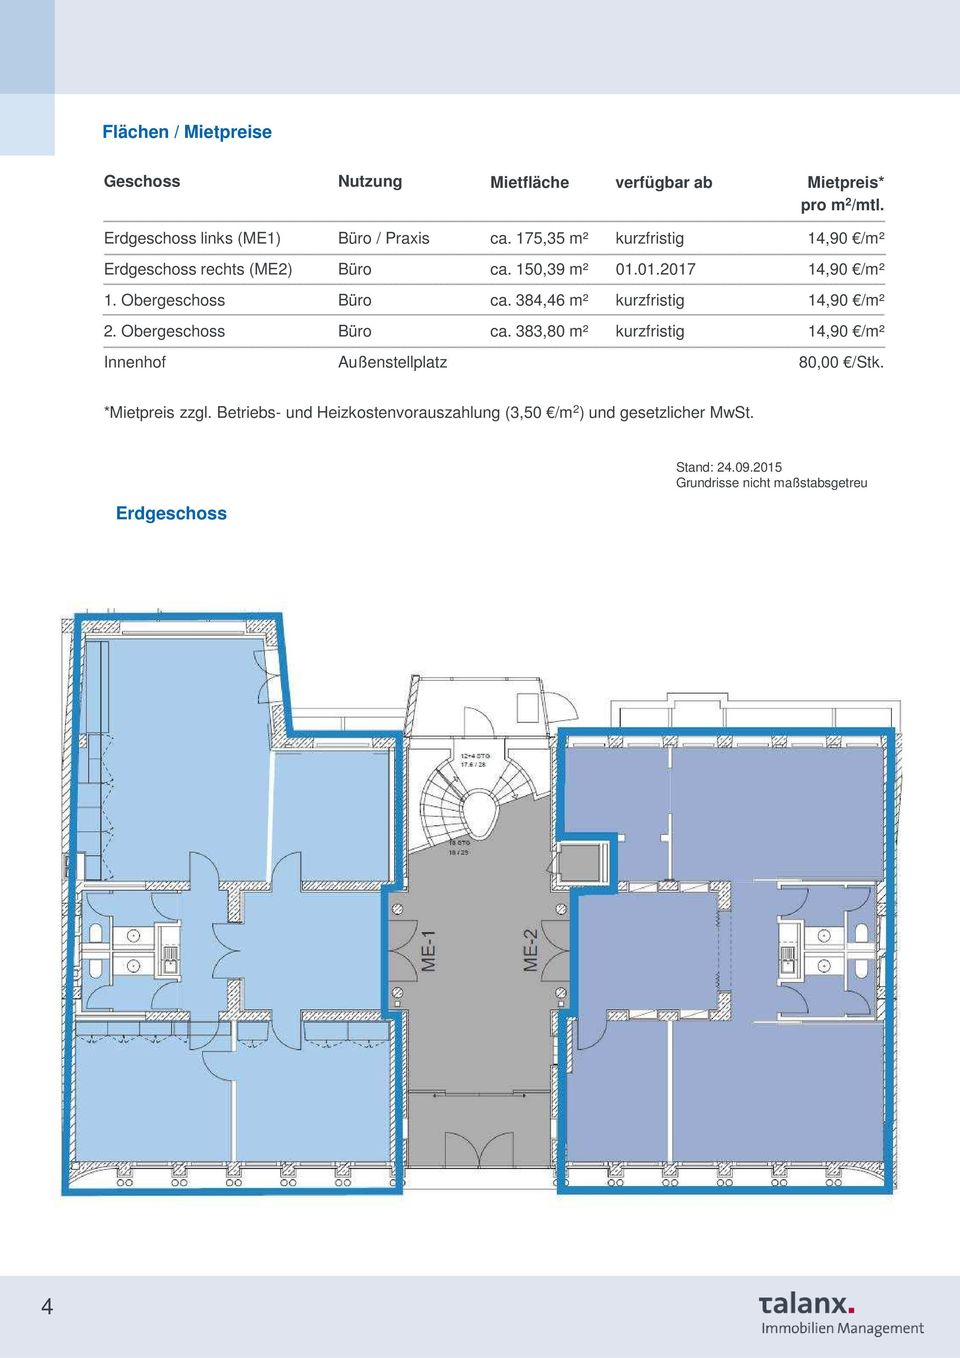 384,46 m² kurzfristig 14,90 /m² 2. Obergeschoss Büro ca. 383,80 m² kurzfristig 14,90 /m² Innenhof Außenstellplatz 80,00 /Stk.